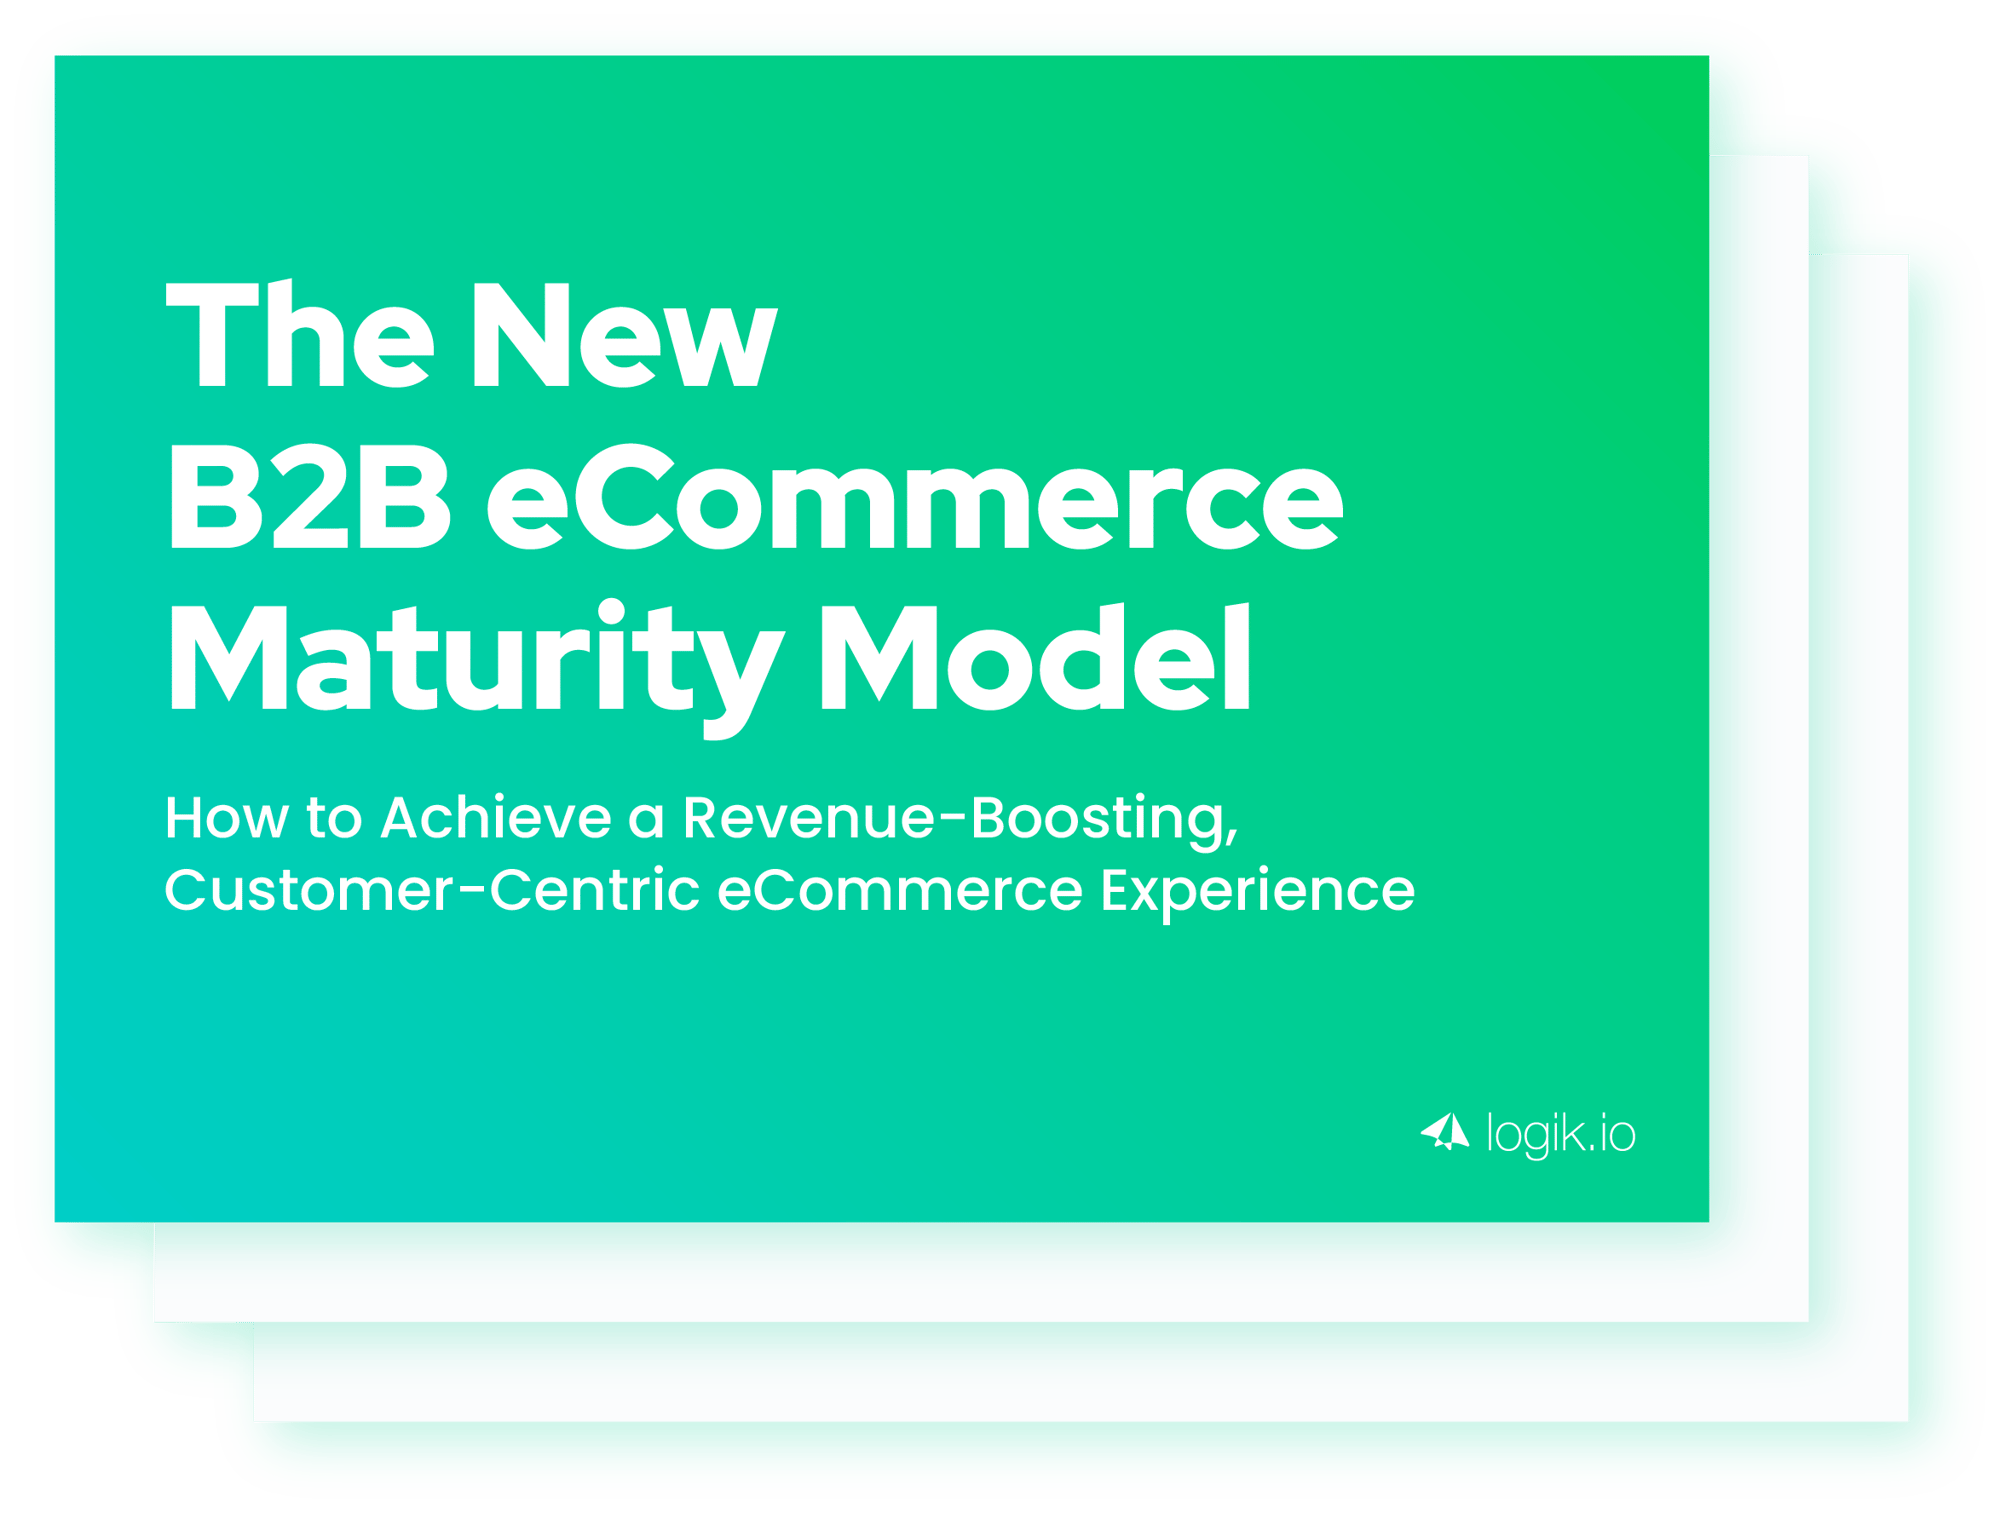 The New B2B eCommerce Maturity Model Guide 1